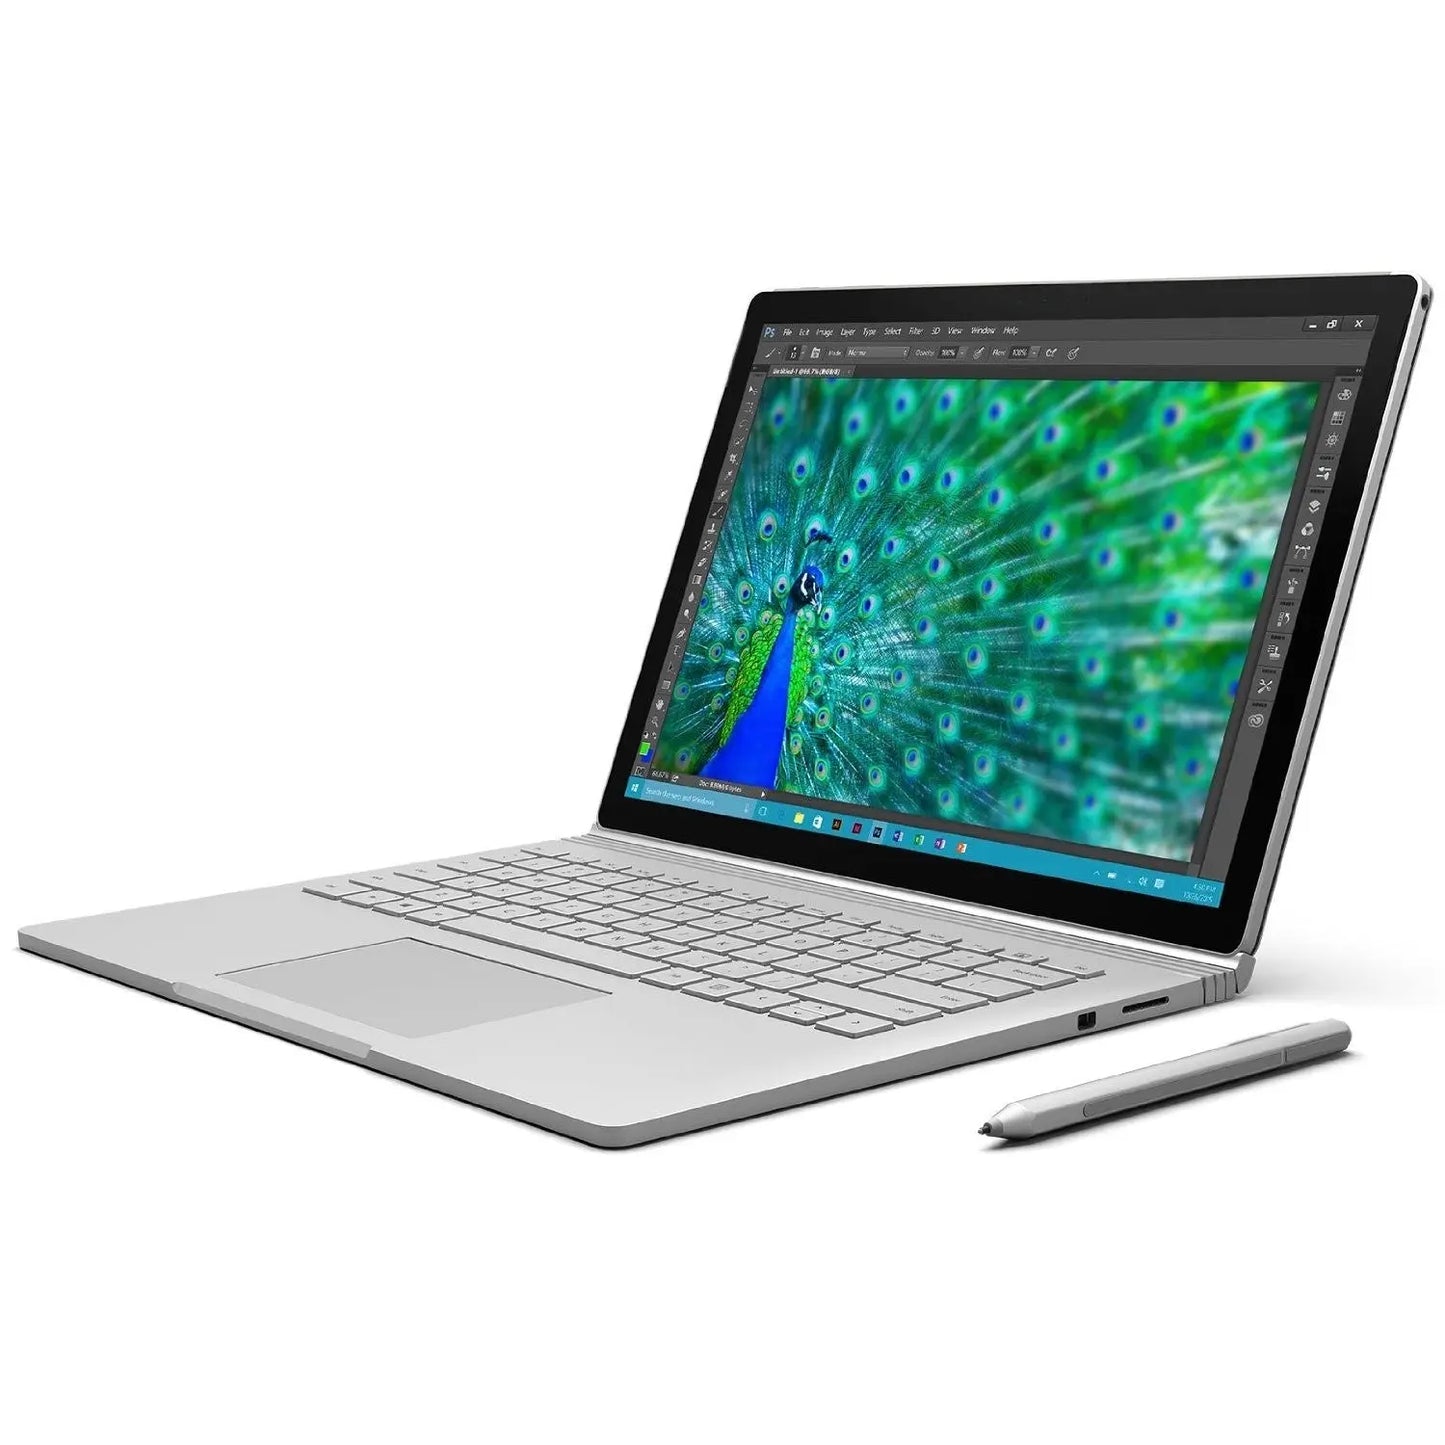 Microsoft Surface Book - 13.5" - Core i5 6300U - Win 10 Pro 64 bits - 8 Go RAM - 128 Go SSD - français Microsoft